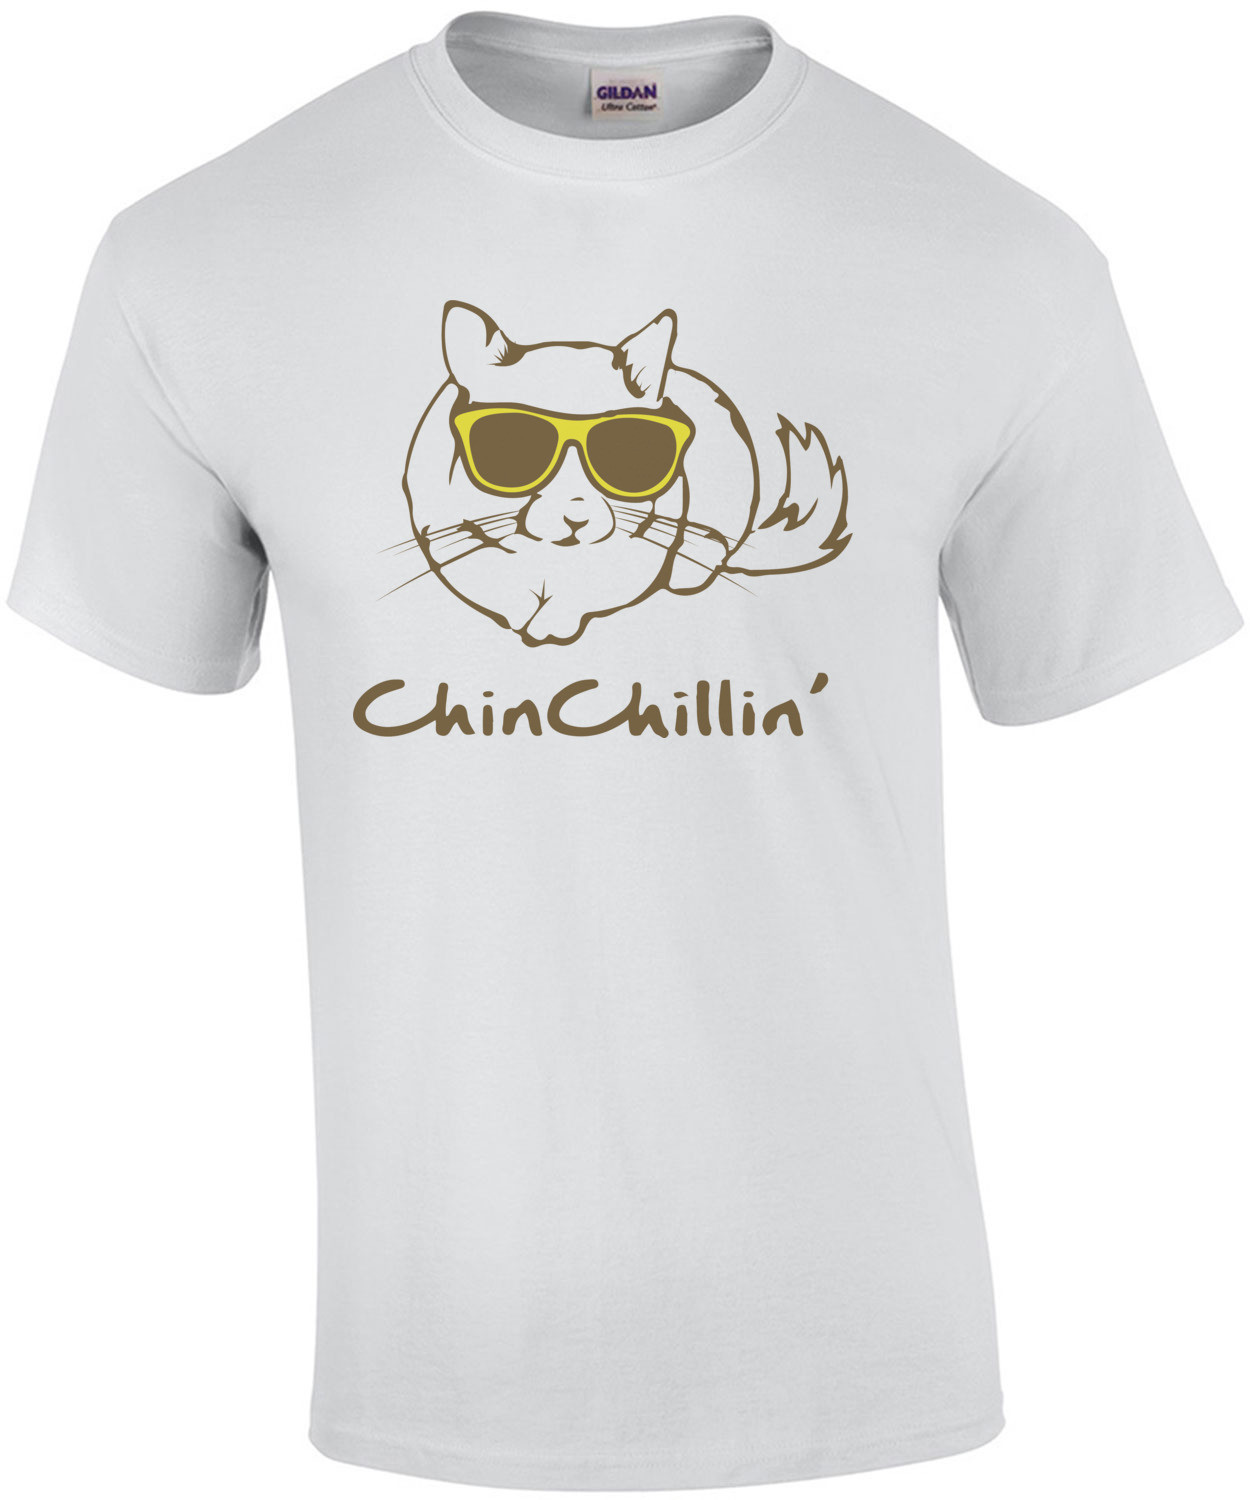 ChinChillin' Funny T-Shirt